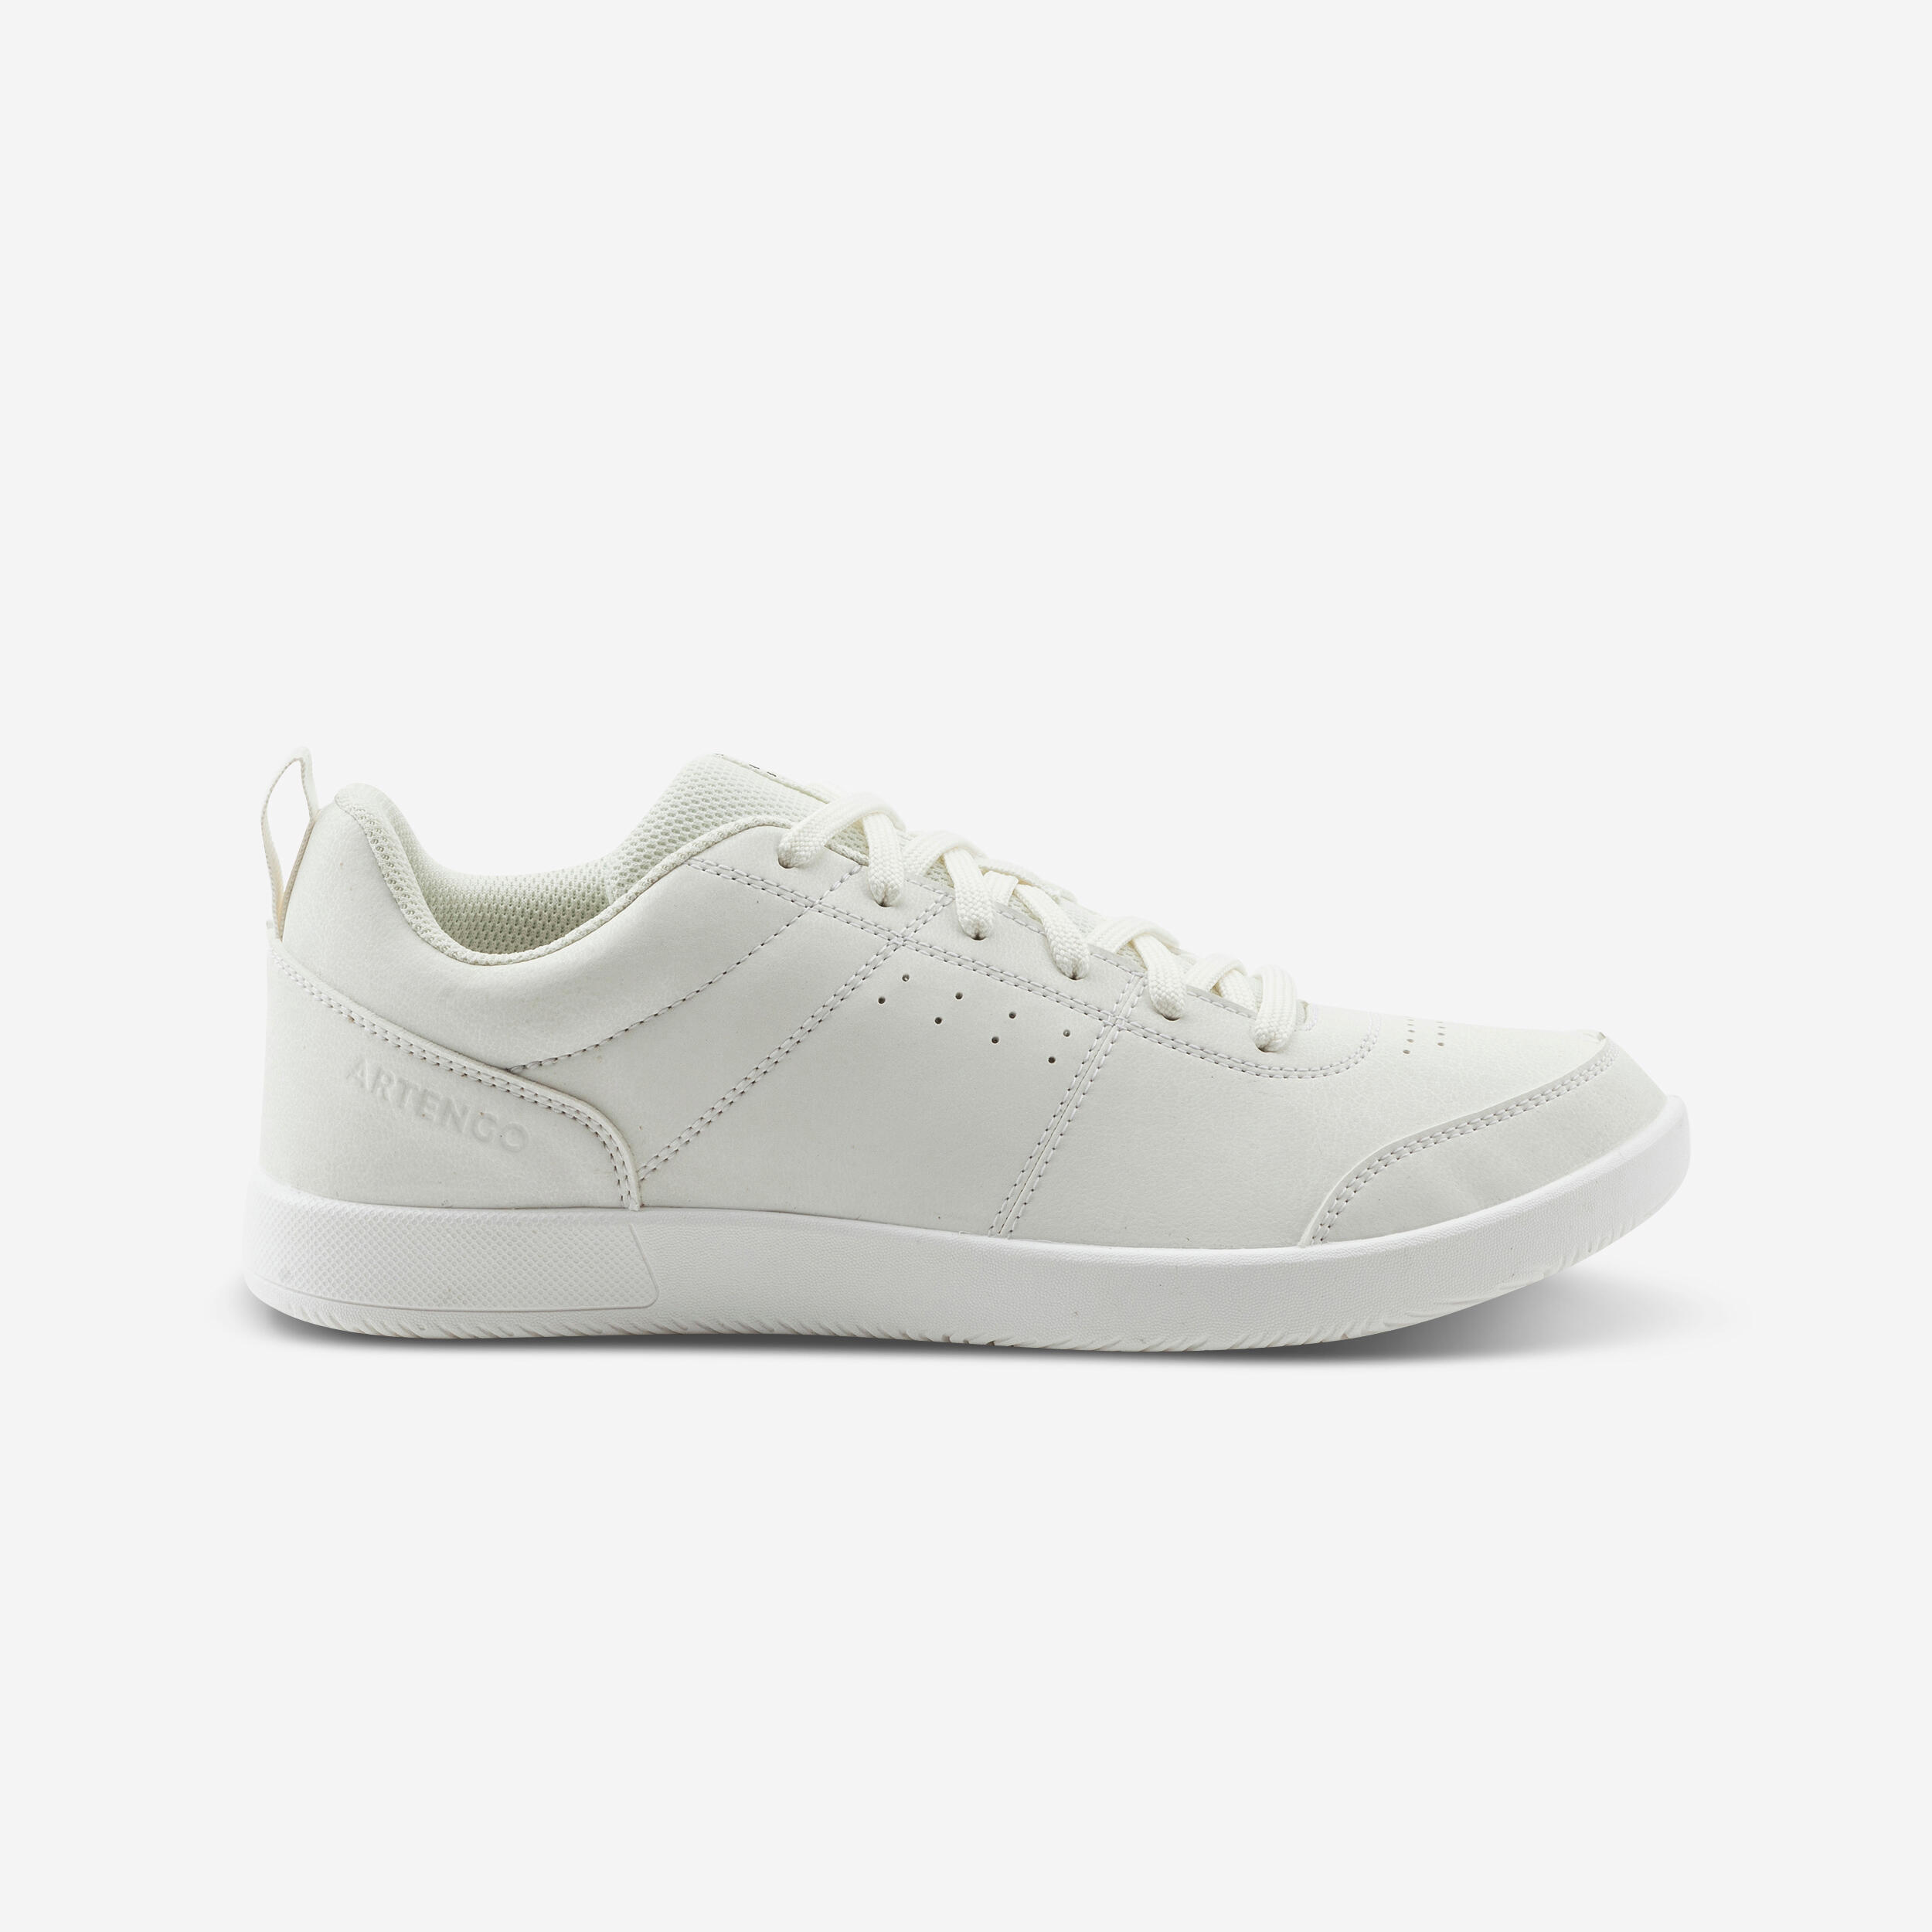 Image of Men's Multi-court Tennis Shoes - Essential White